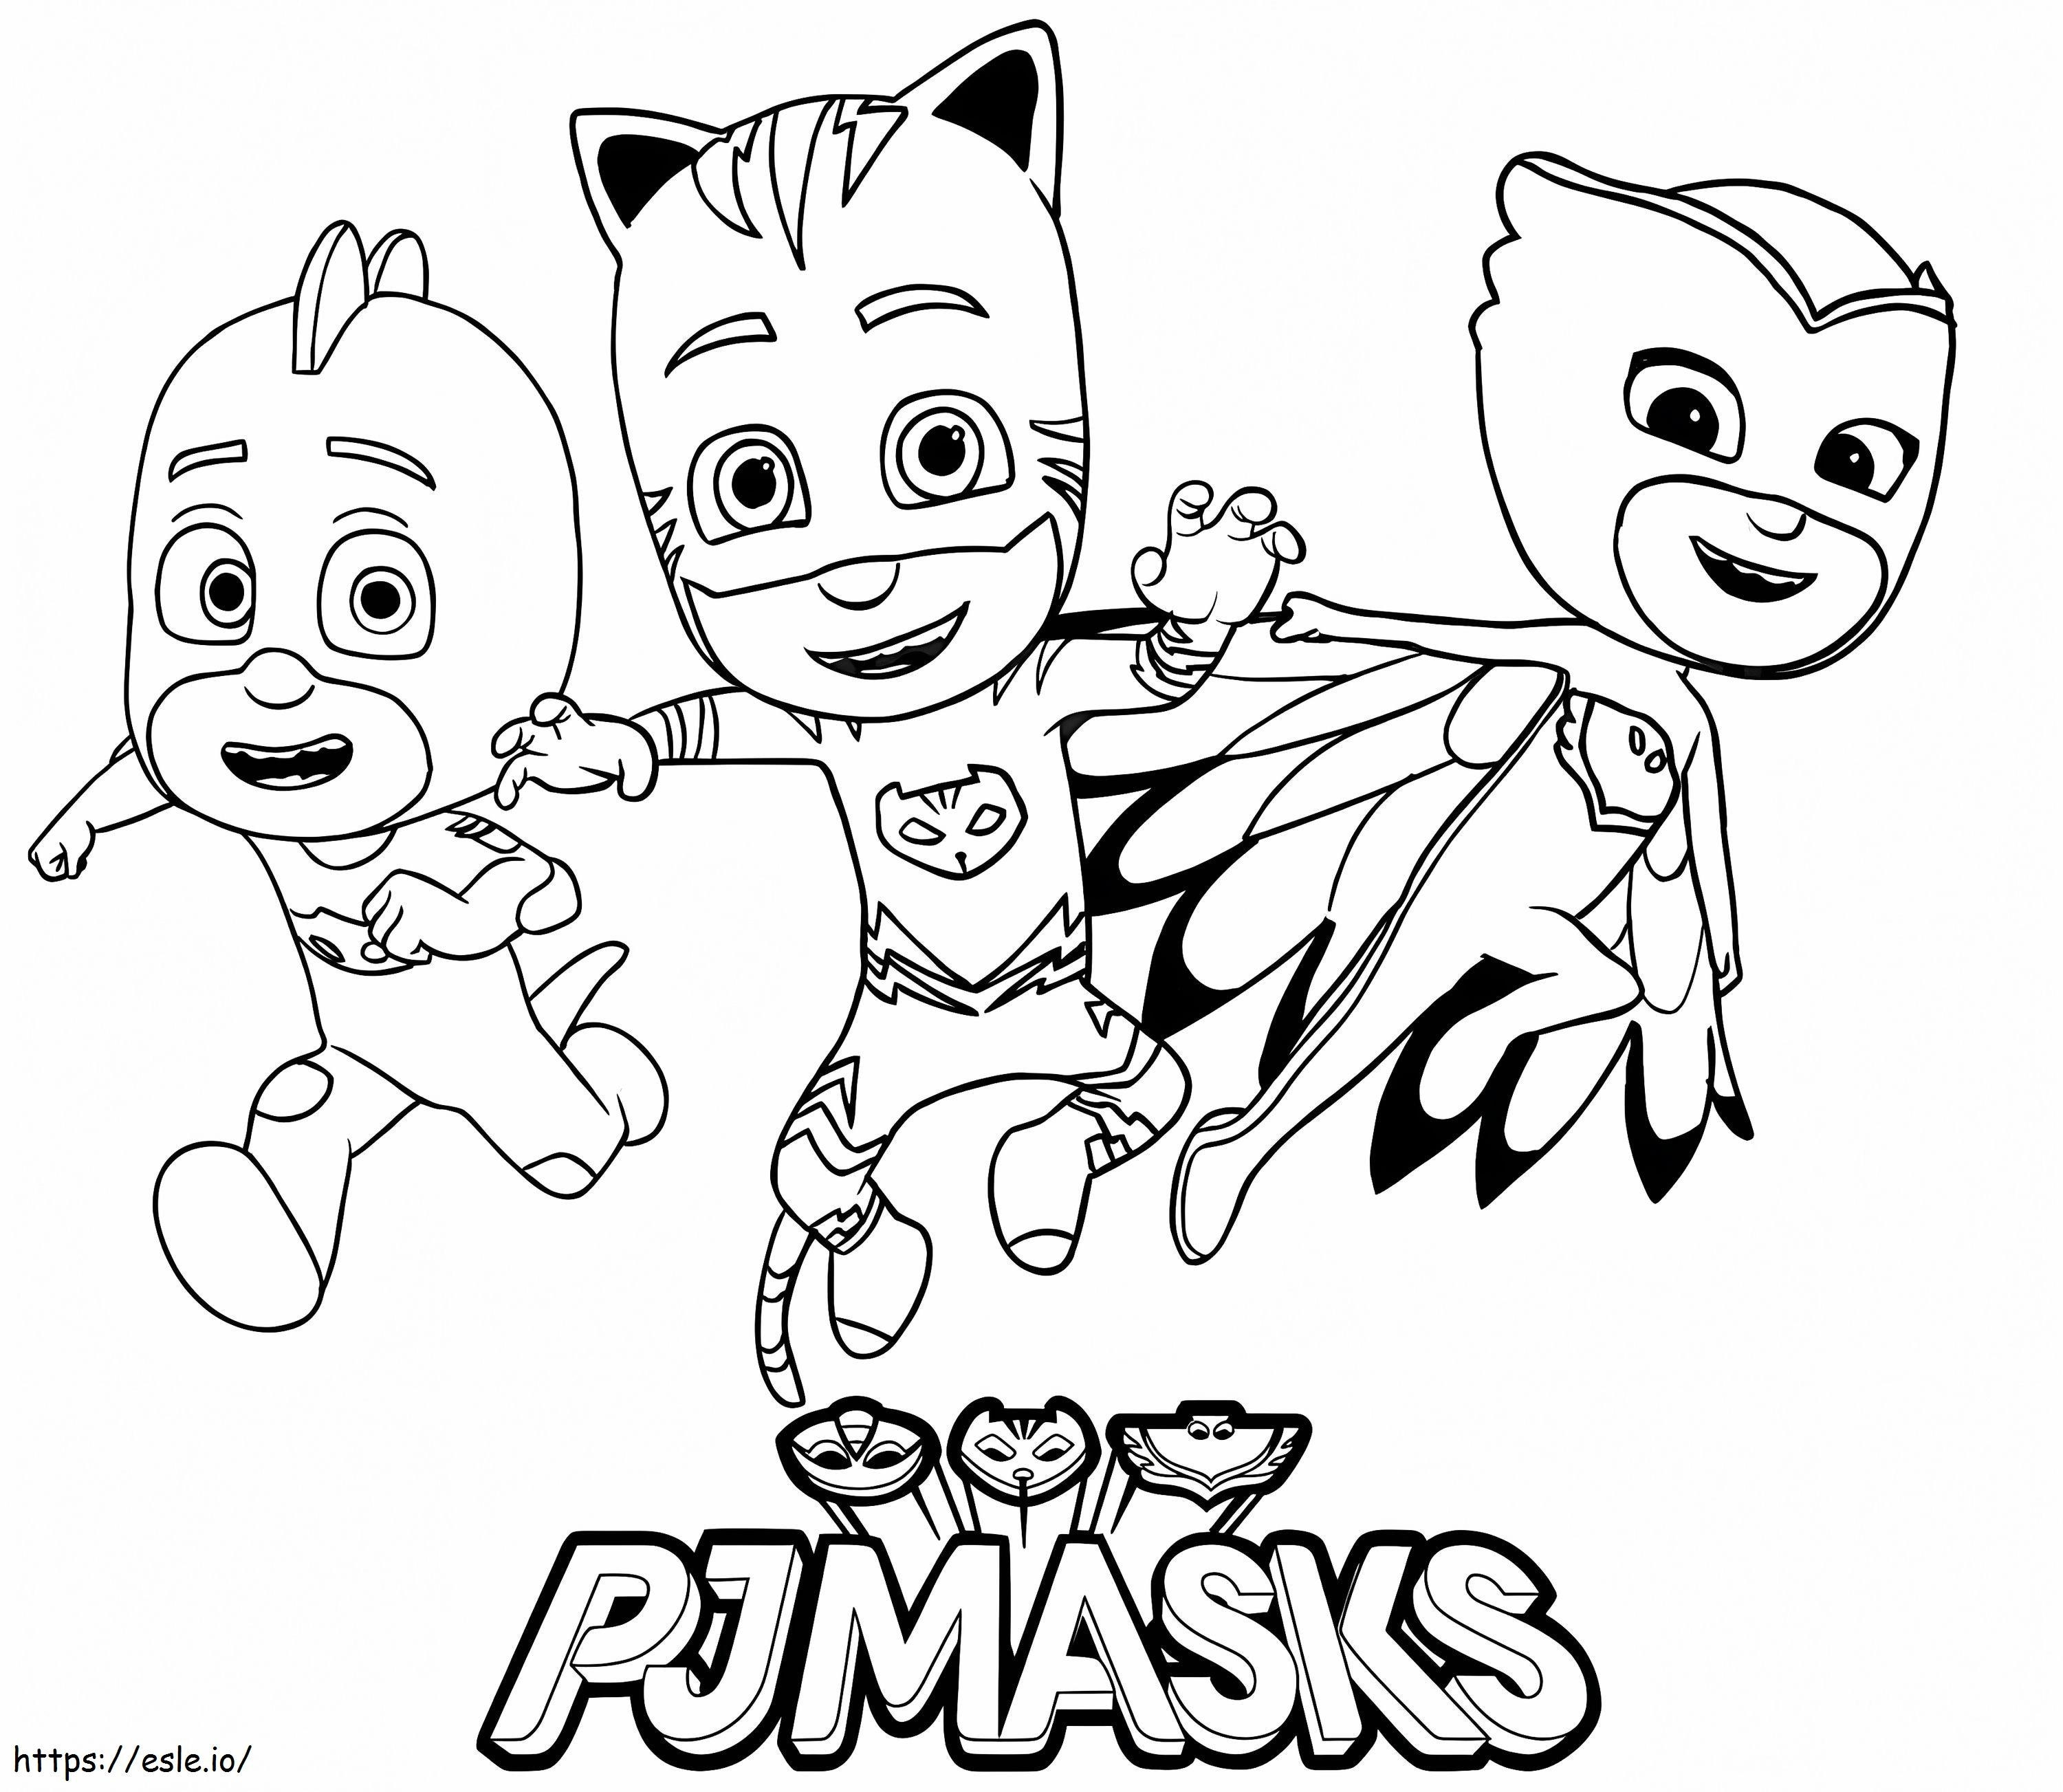 PJ Masks Free coloring page